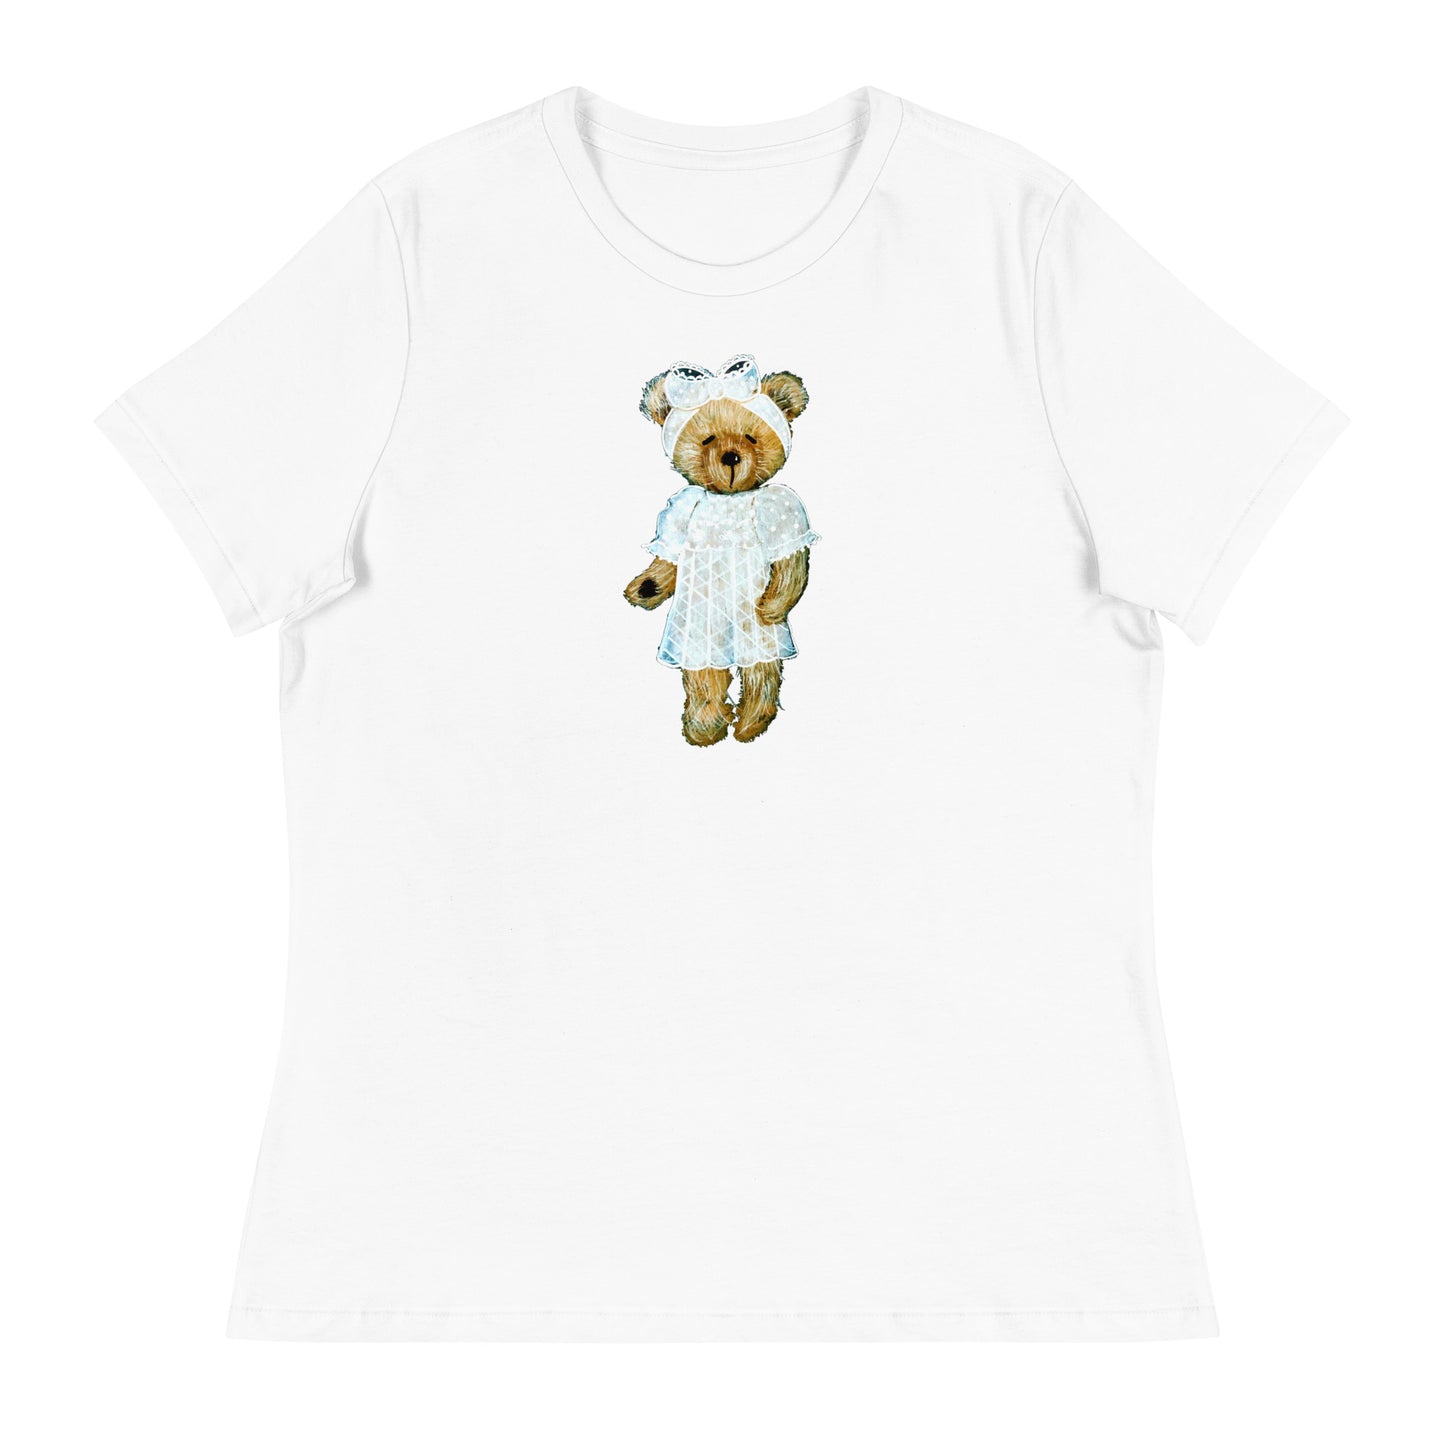 Bear in Lace Dress Women's T-Shirt